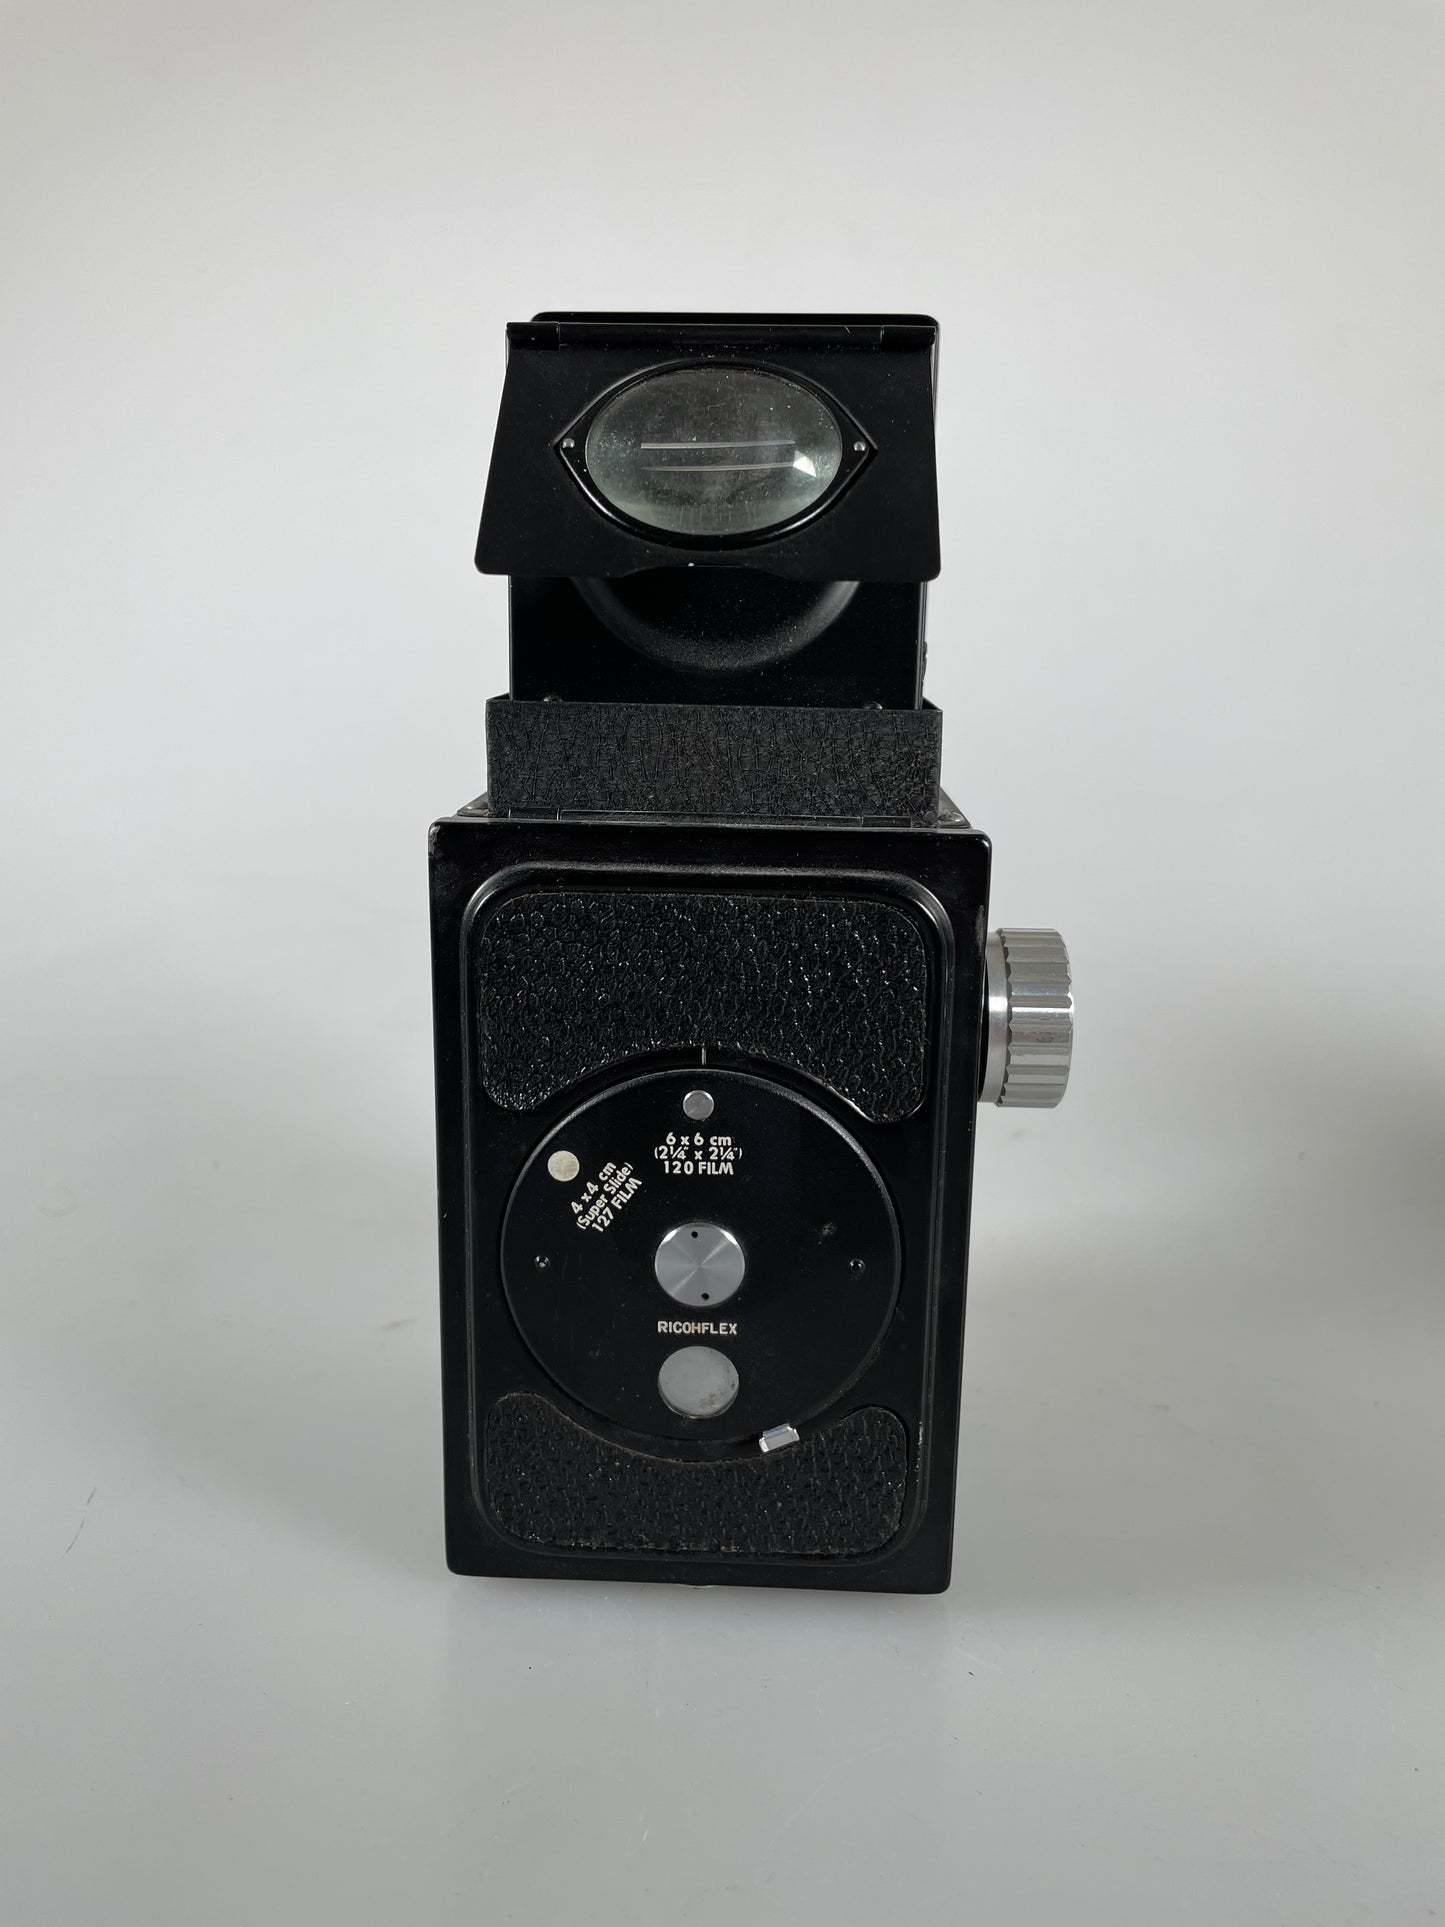 Ricoh Super Ricohflex 6x6 120 Roll Film Camera with 8cm f3.5 Lens